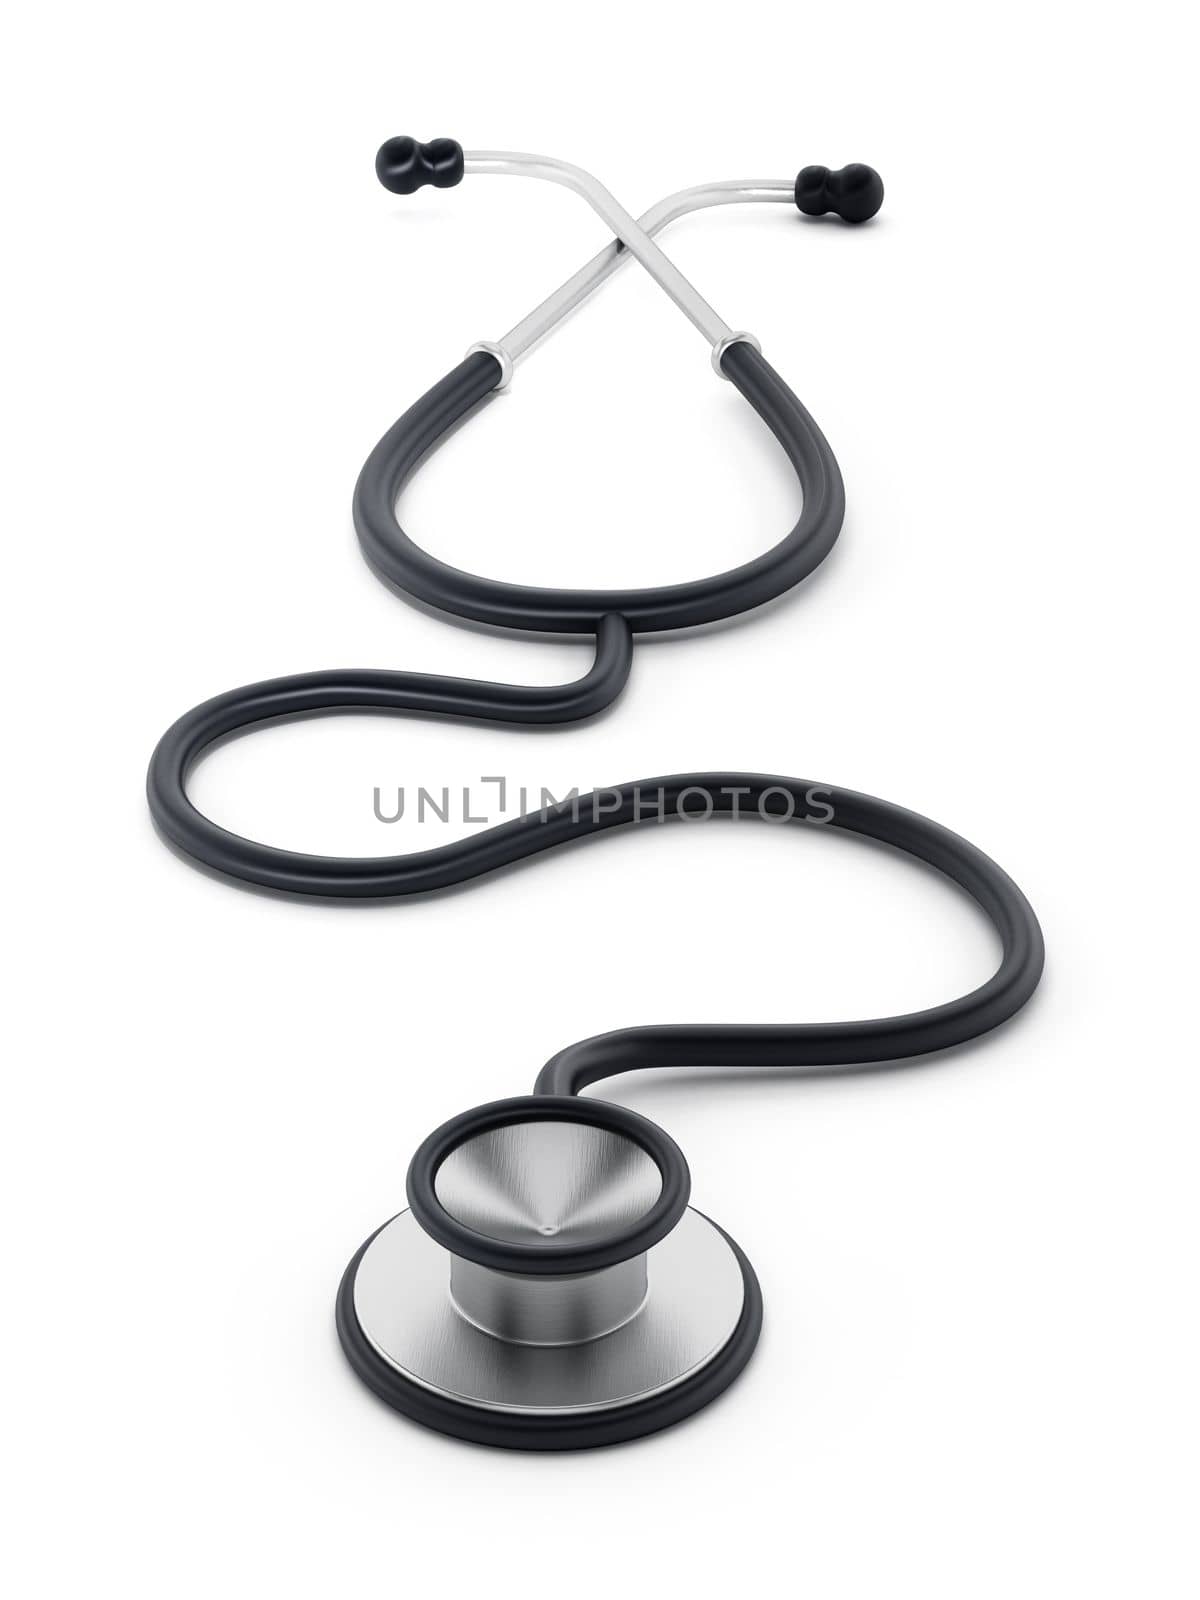 Stethoscope standing on white surface. 3D illustration.